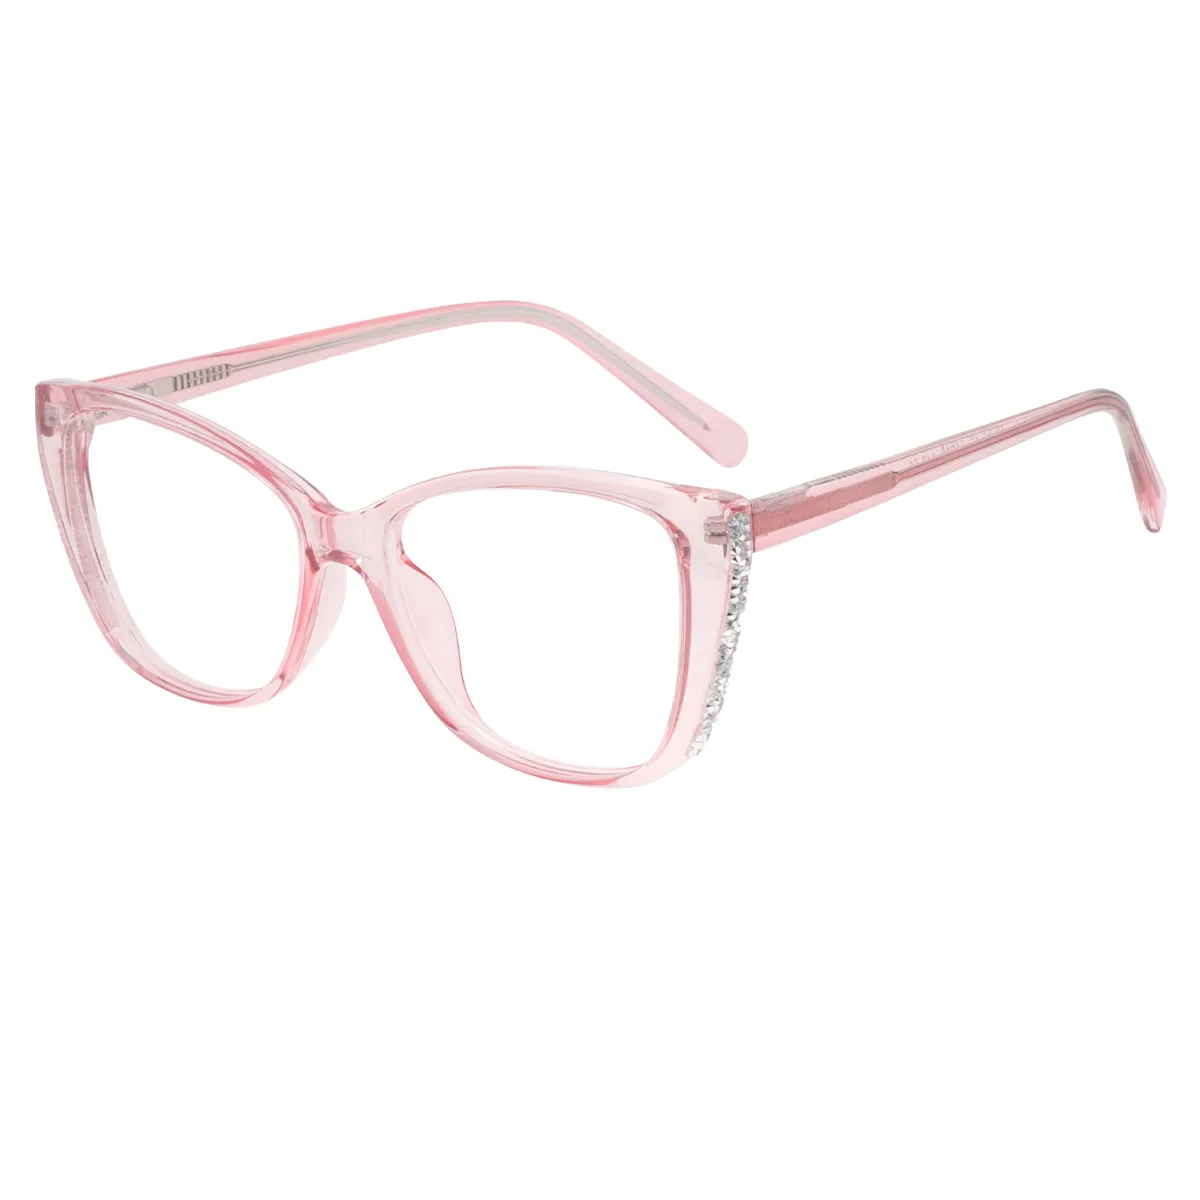 Fashion Cat-eye Black Glasses for Women